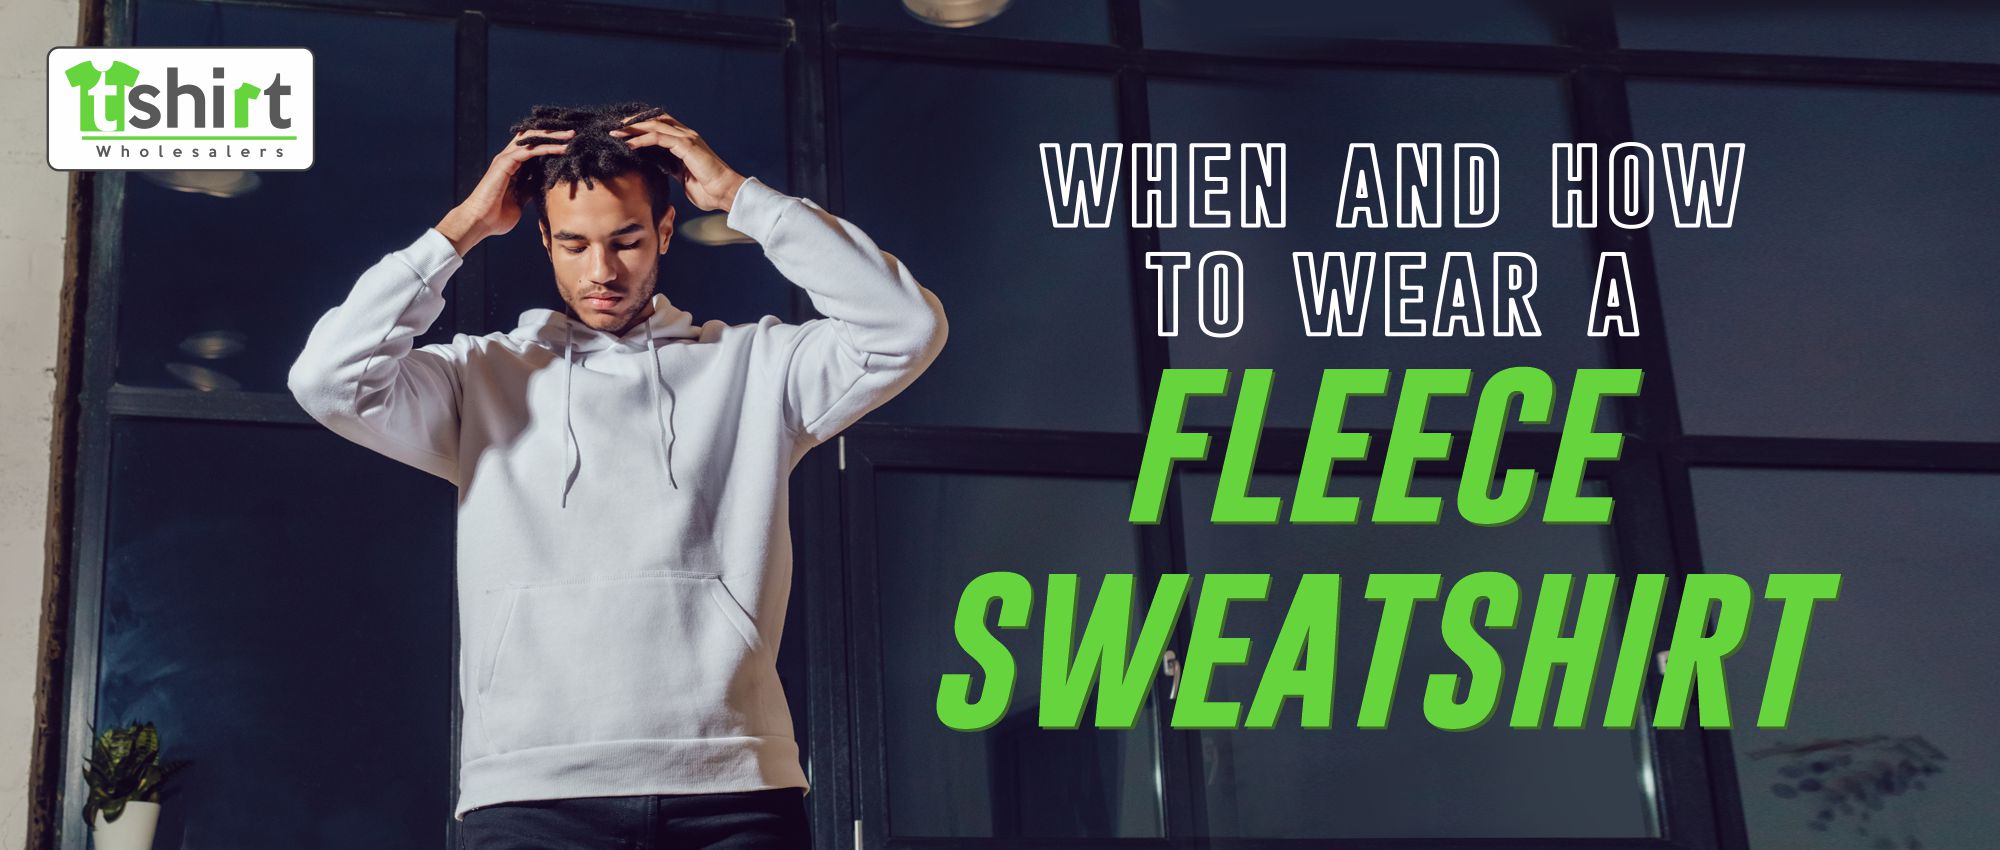 WHEN AND HOW TO WEAR A FLEECE SWEATSHIRT – T Shirt Wholesalers